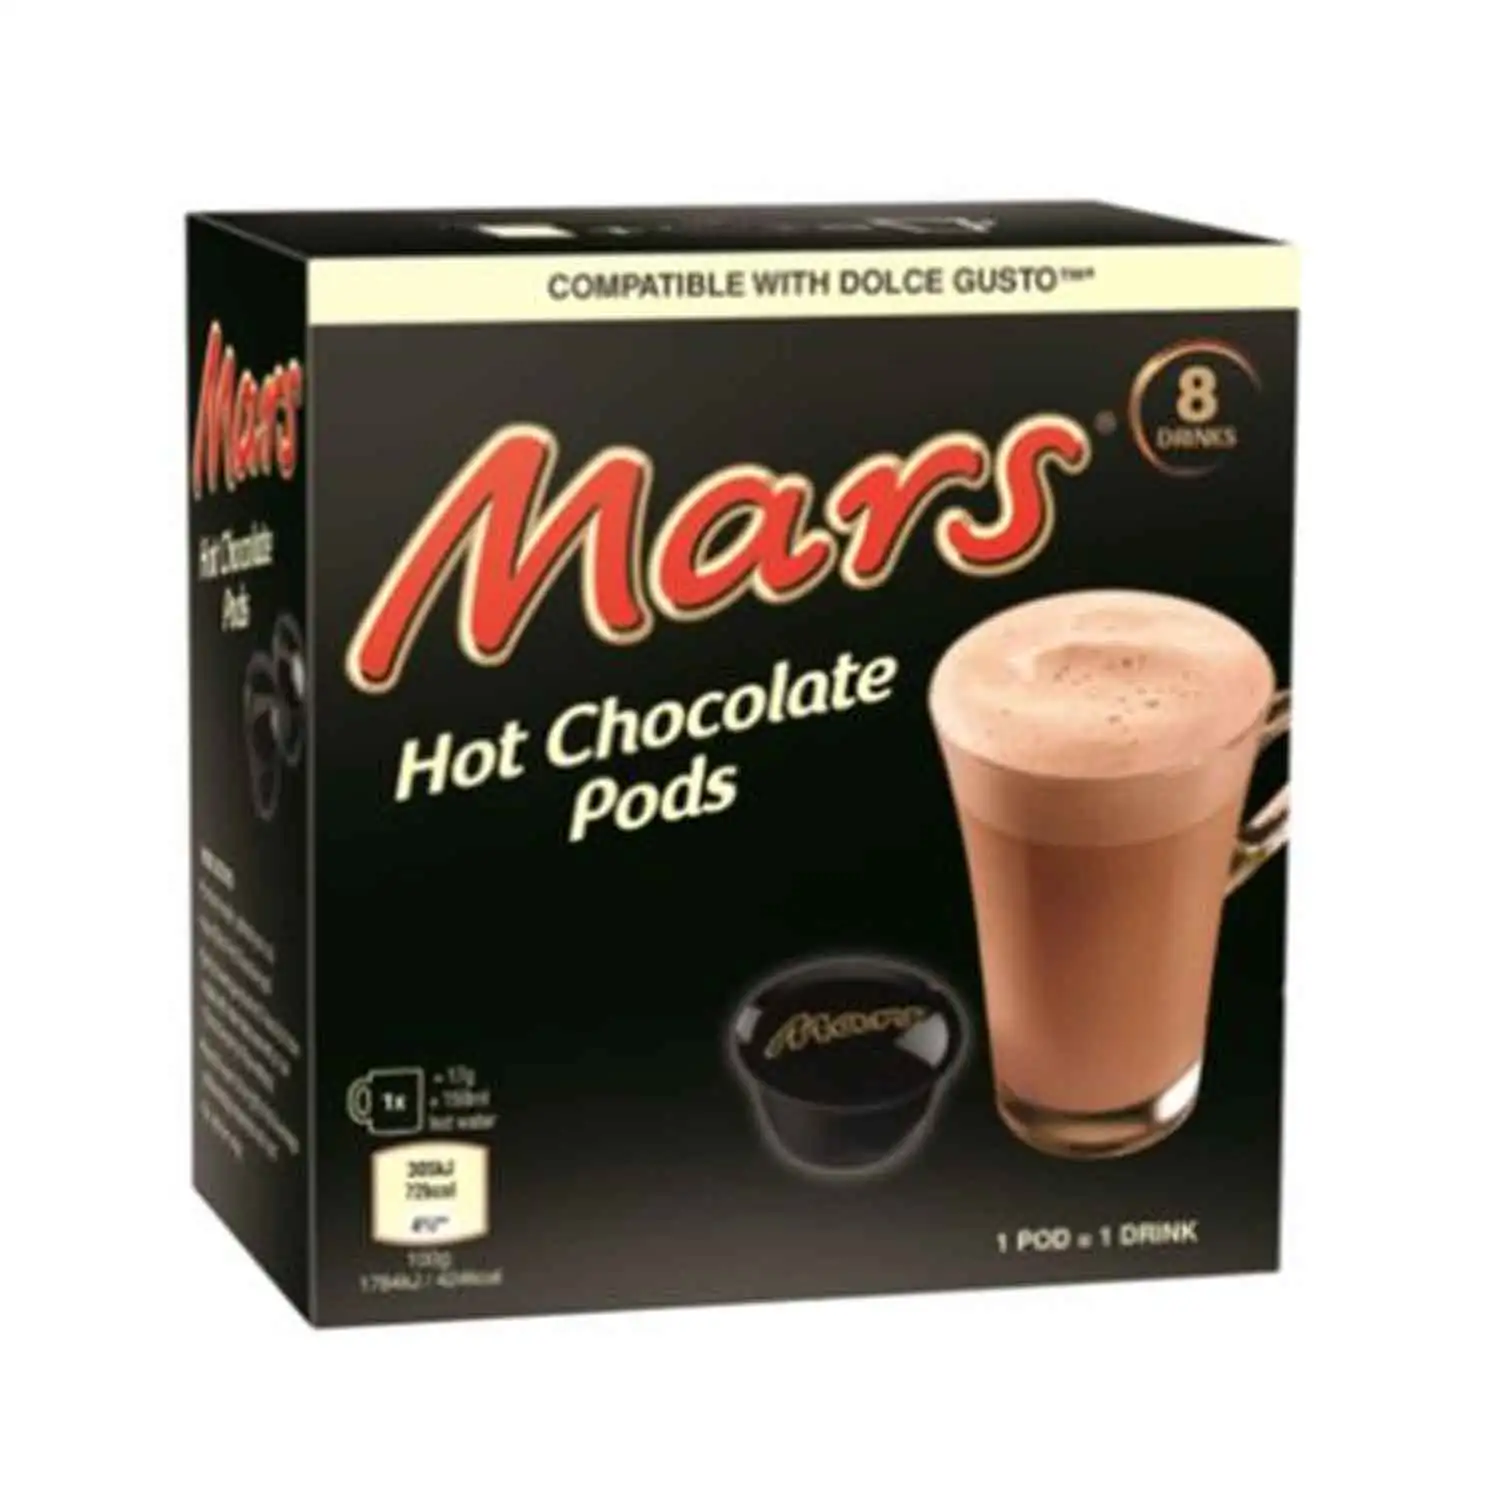 Mars hot chocolate pods 8x17g - Buy at Real Tobacco